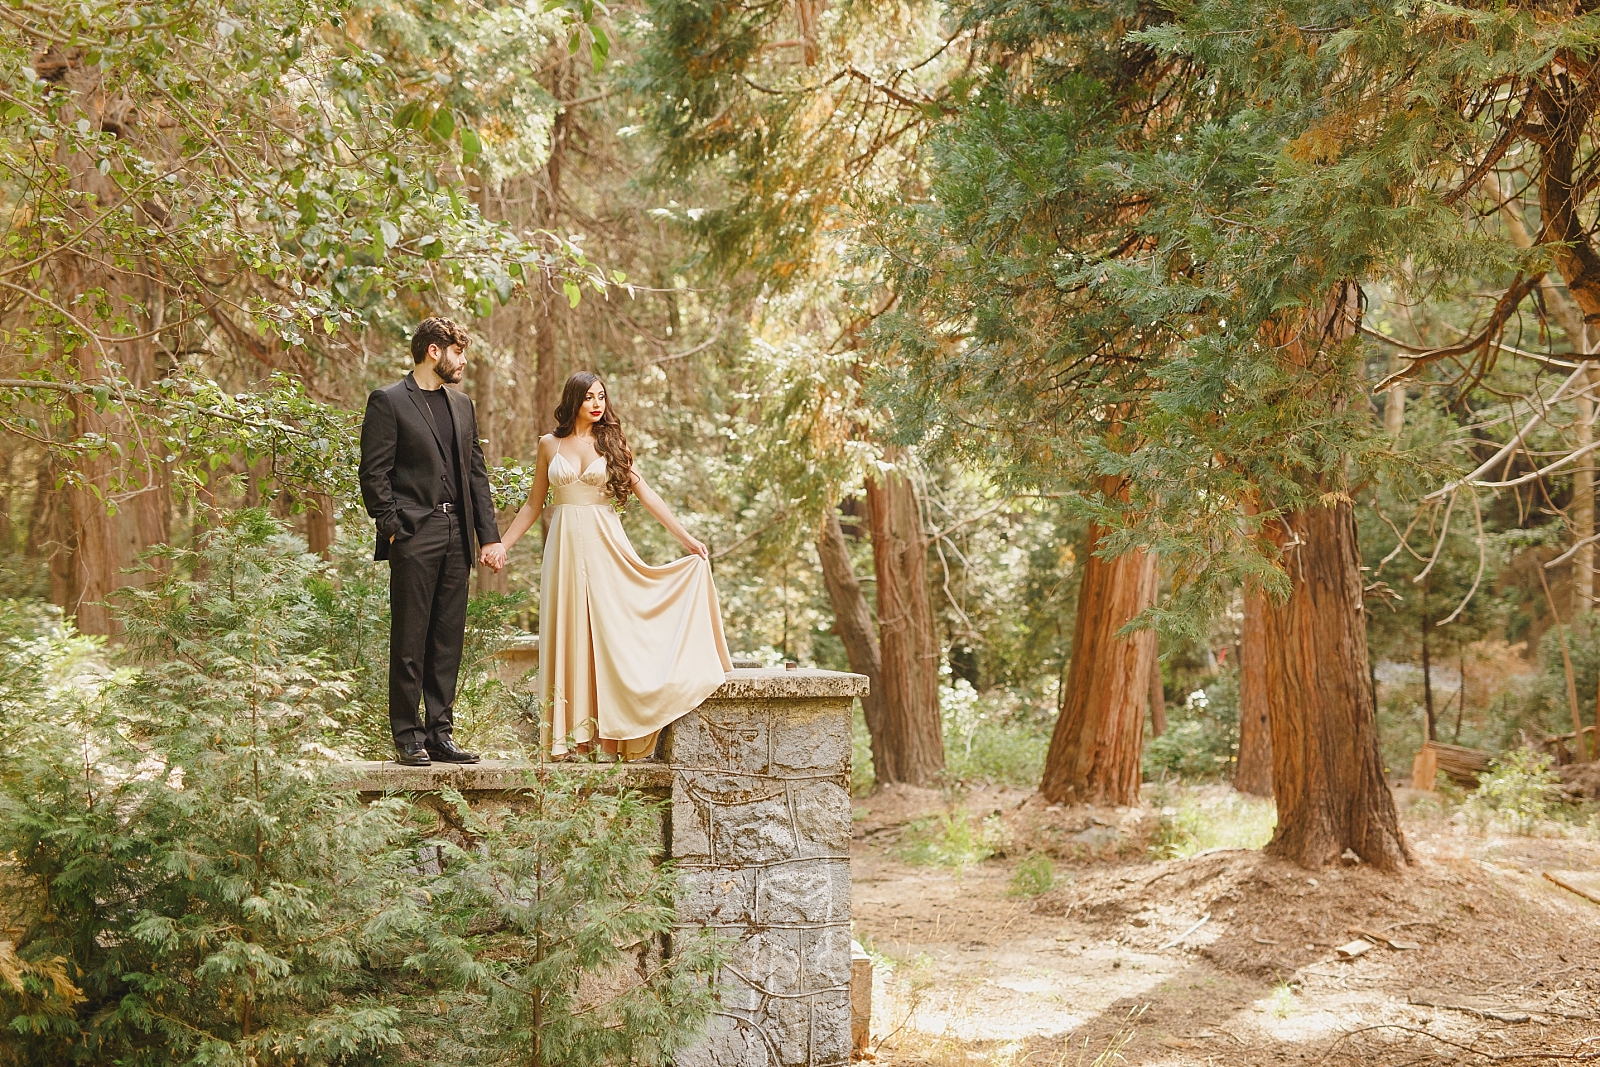 Lake Arrowhead California forest fairytale engagement photoshoot